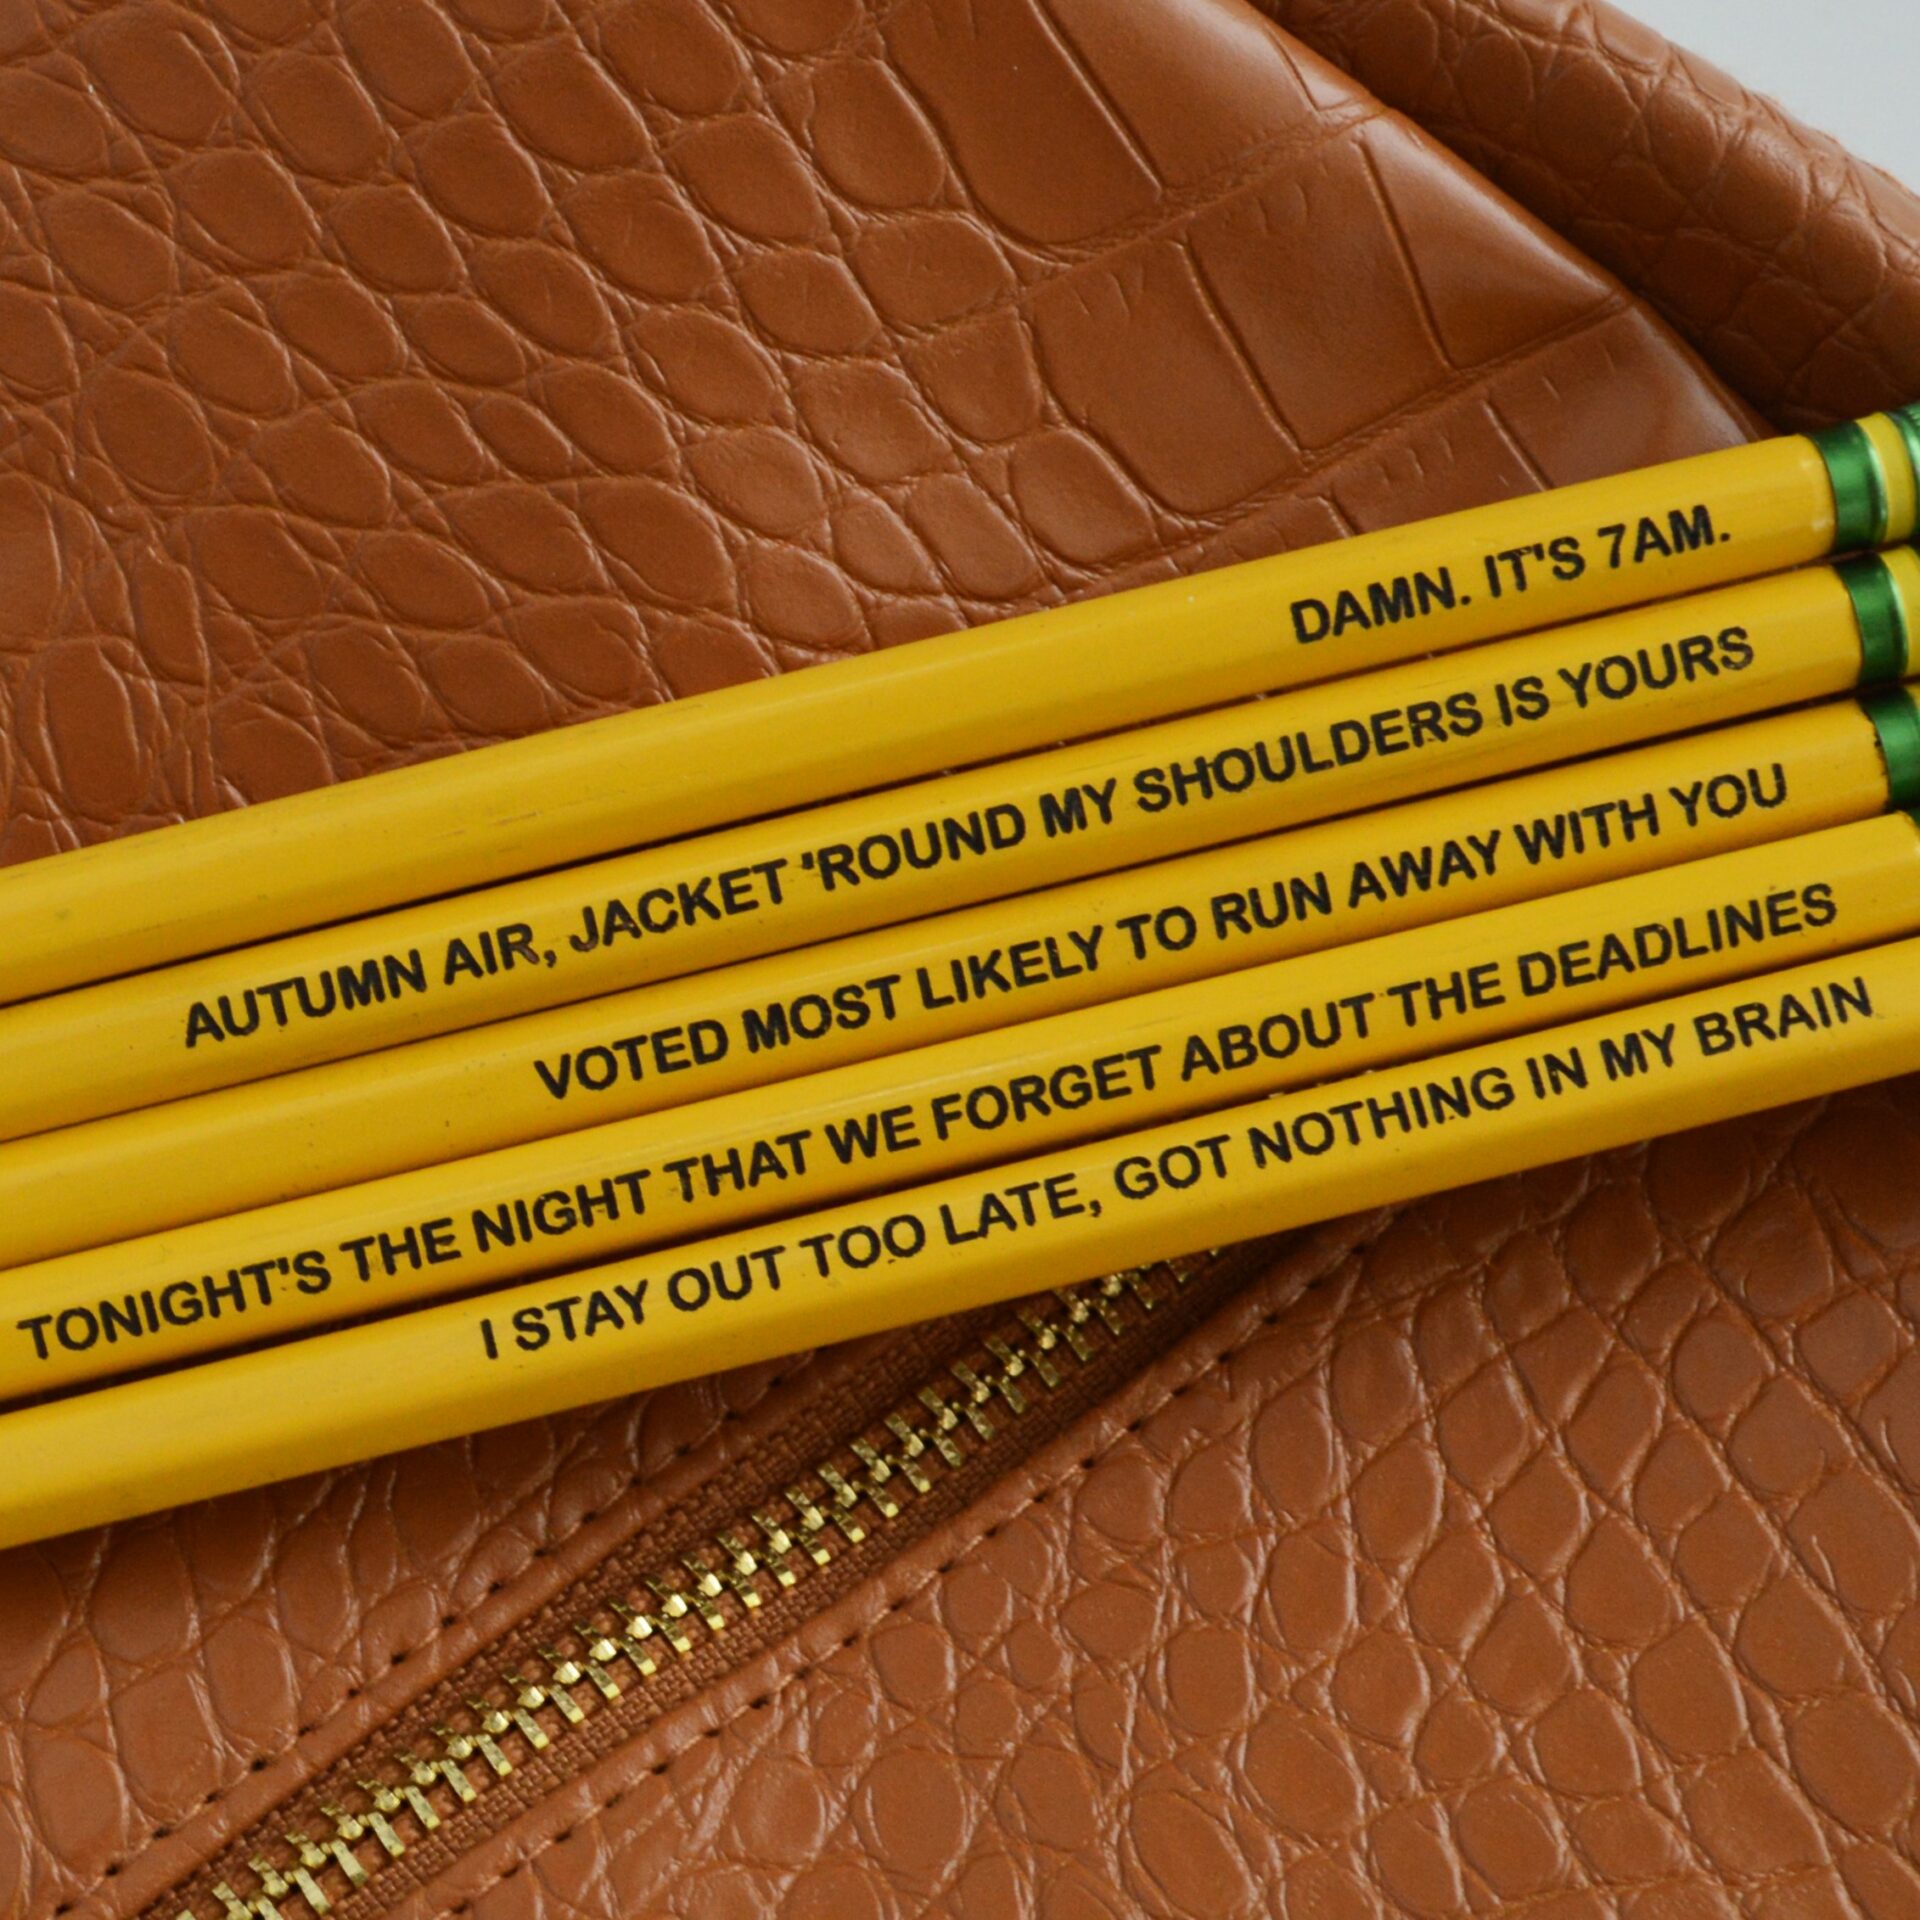 Taylor Swift Back to School Pencils